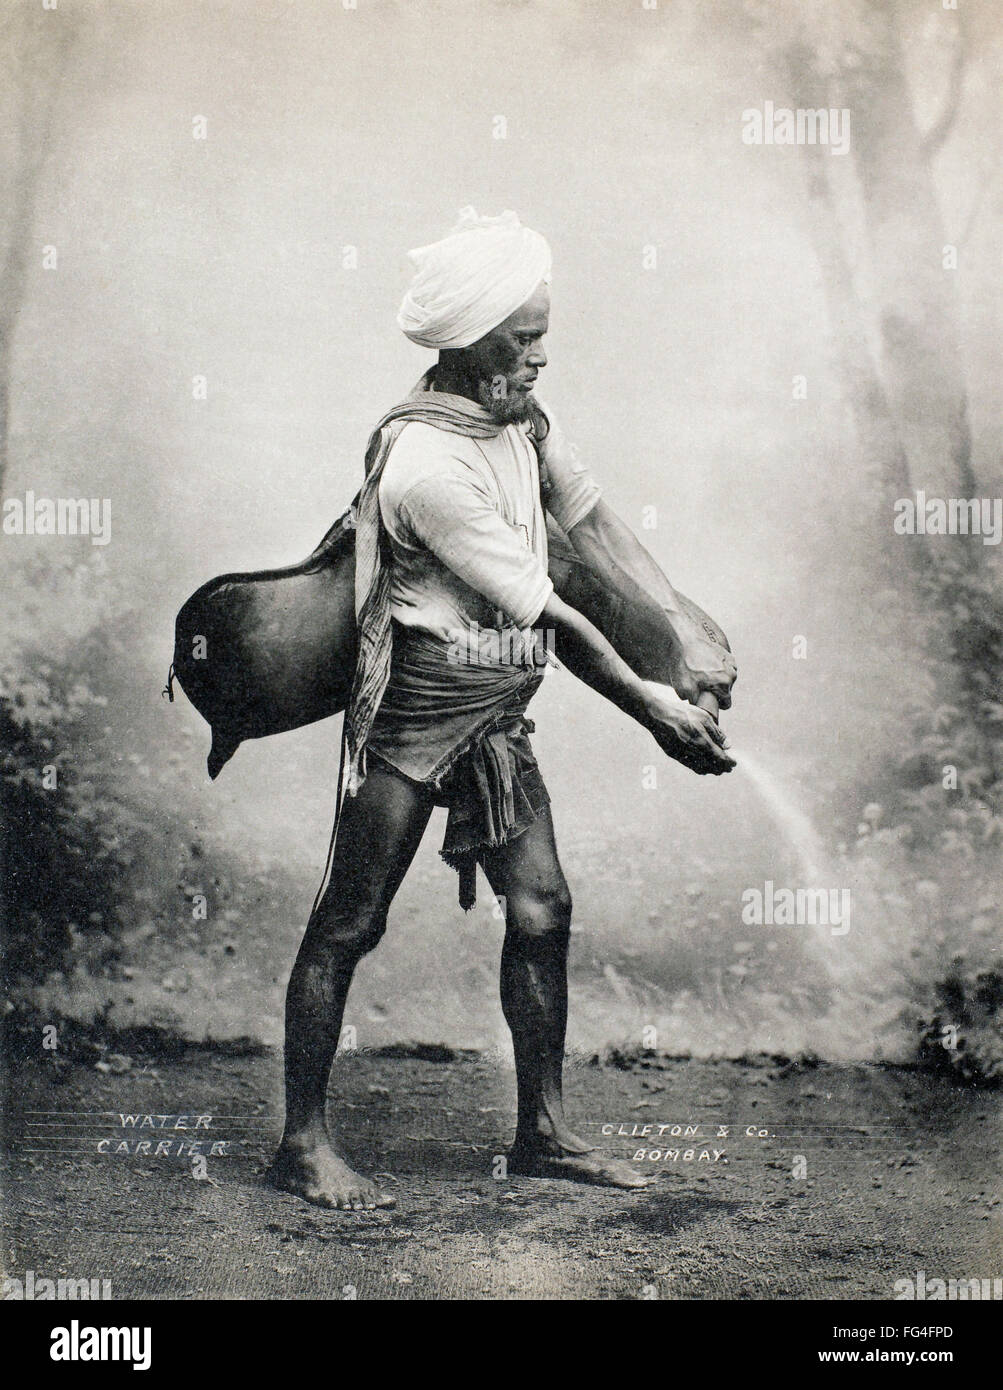 INDIA: Portador de agua. /NA portador de agua en Bombay (ahora Mumbai), India. Fotografía por Clifton and Company, de finales del siglo XIX o principios del siglo XX. Foto de stock